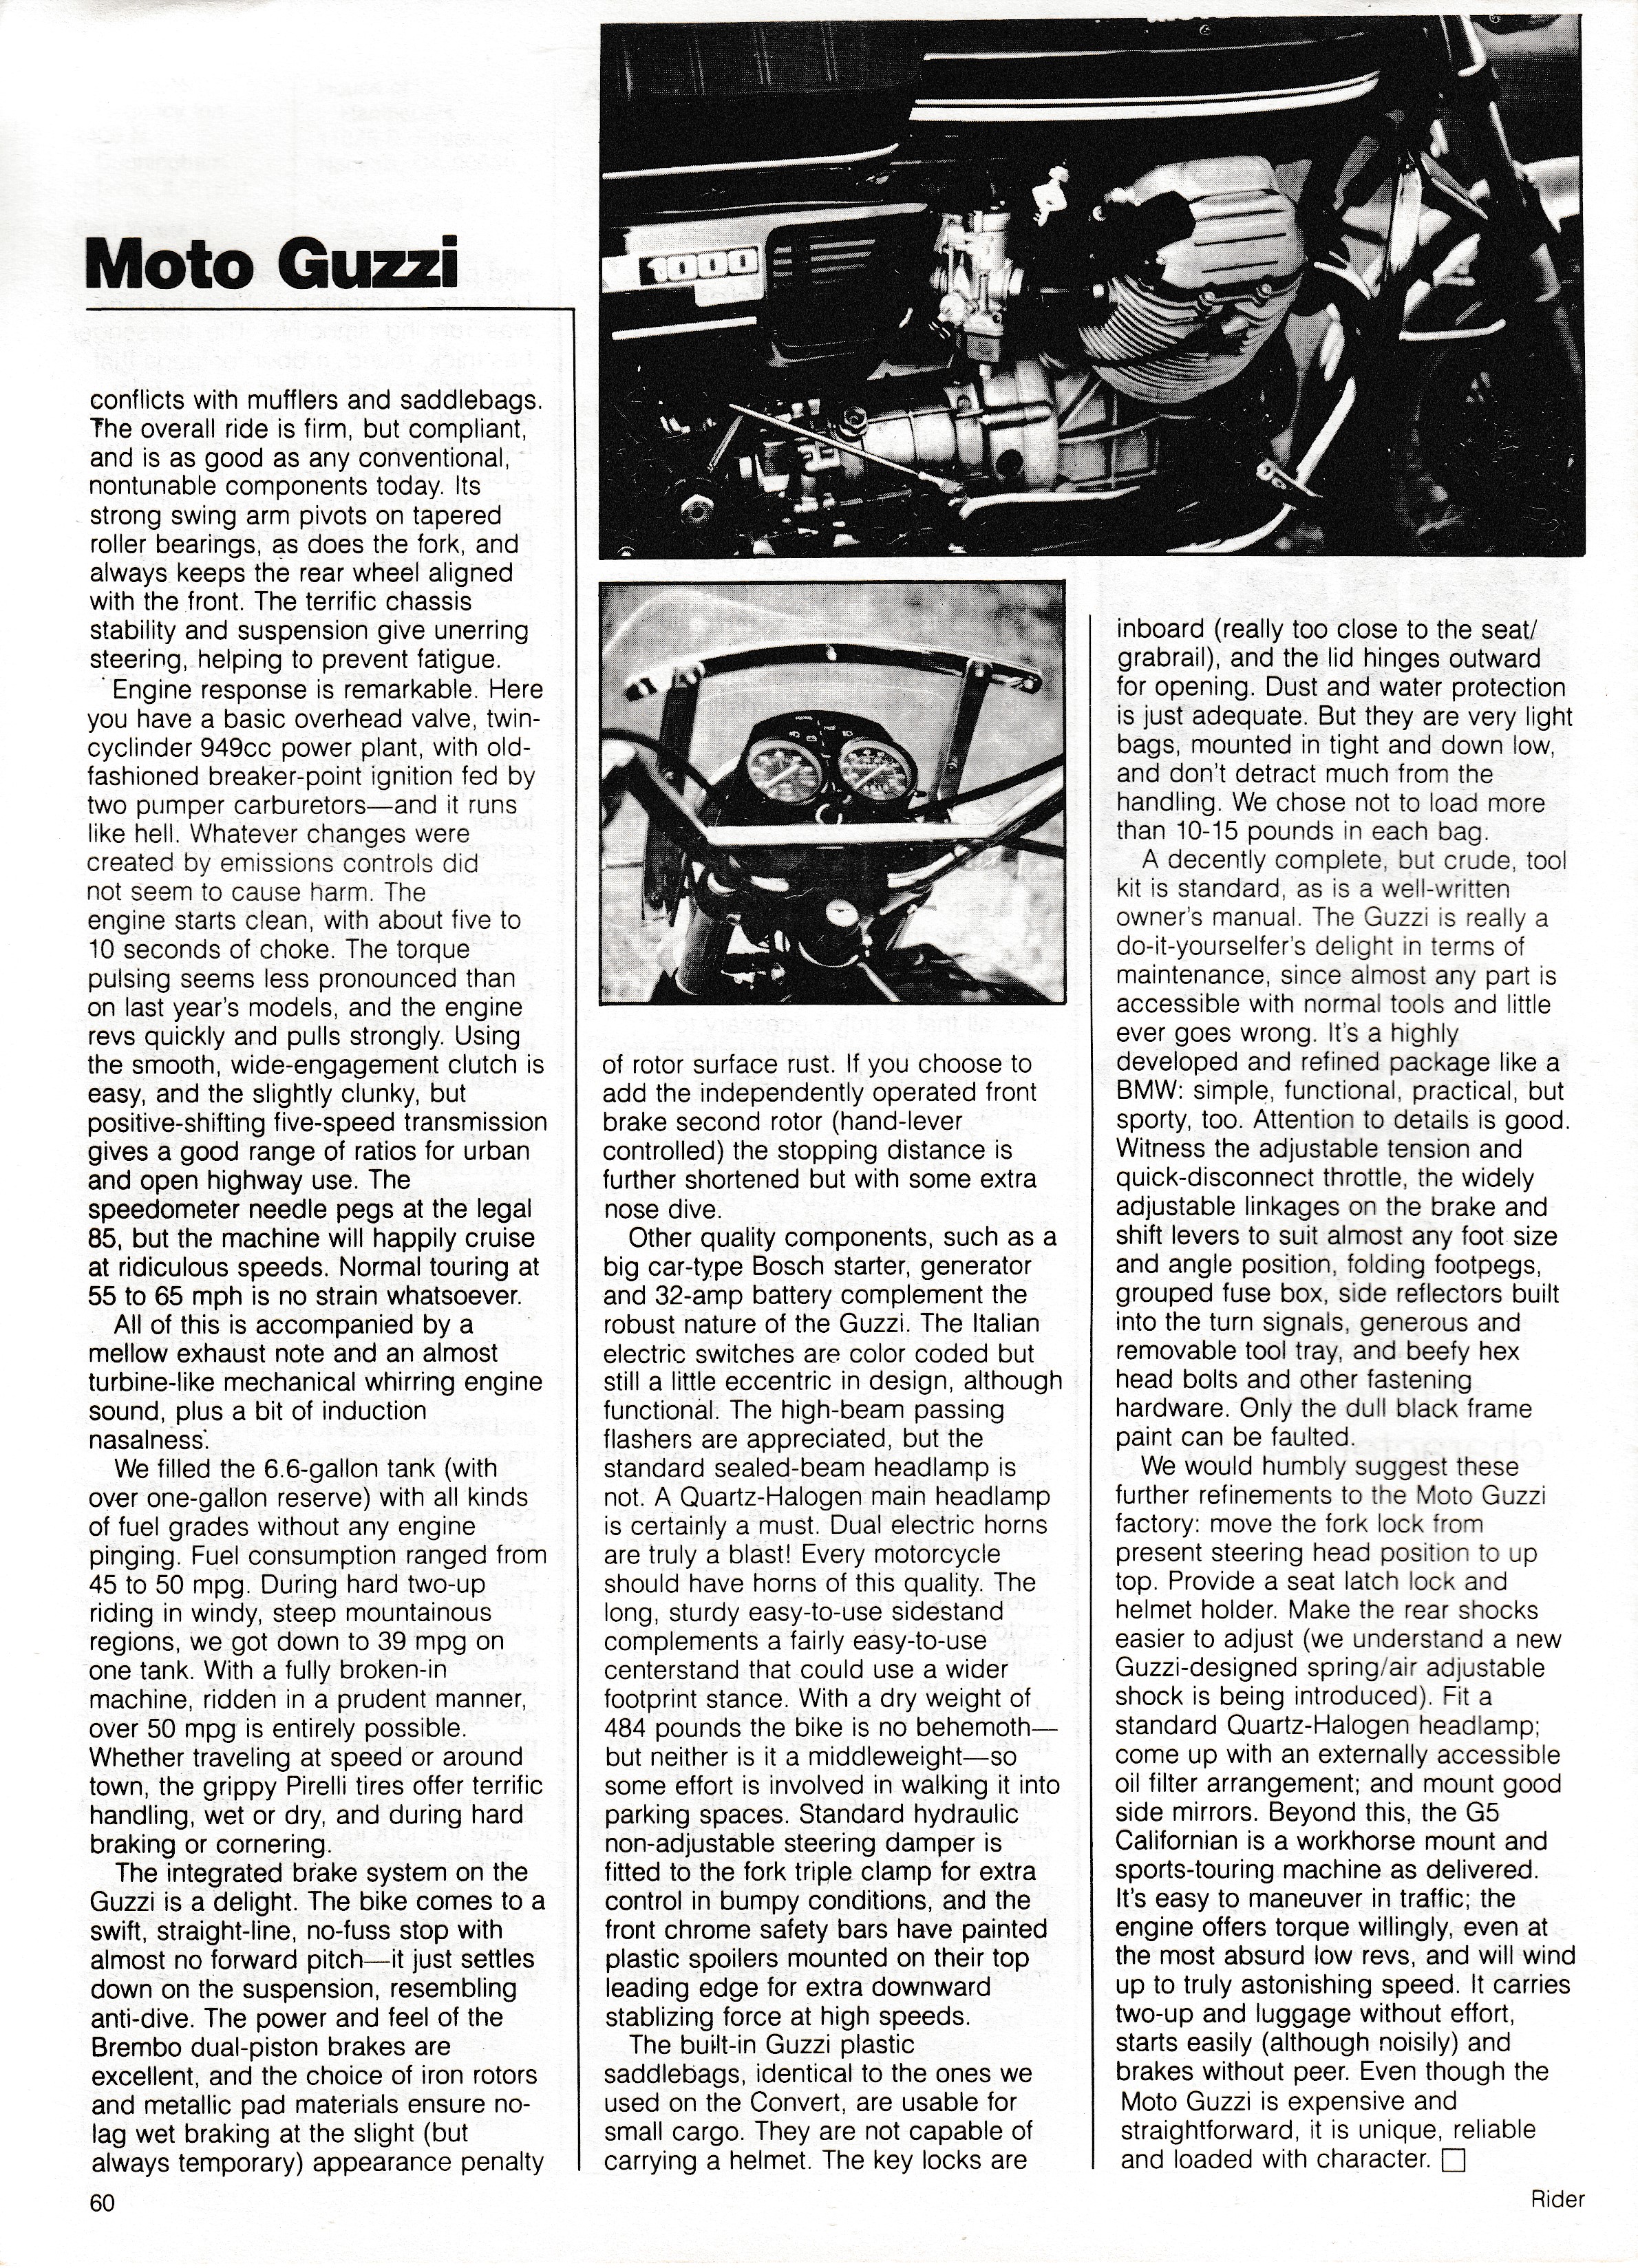 Article - Rider (1982 January) Tour-testing Moto Guzzi G5 Californian